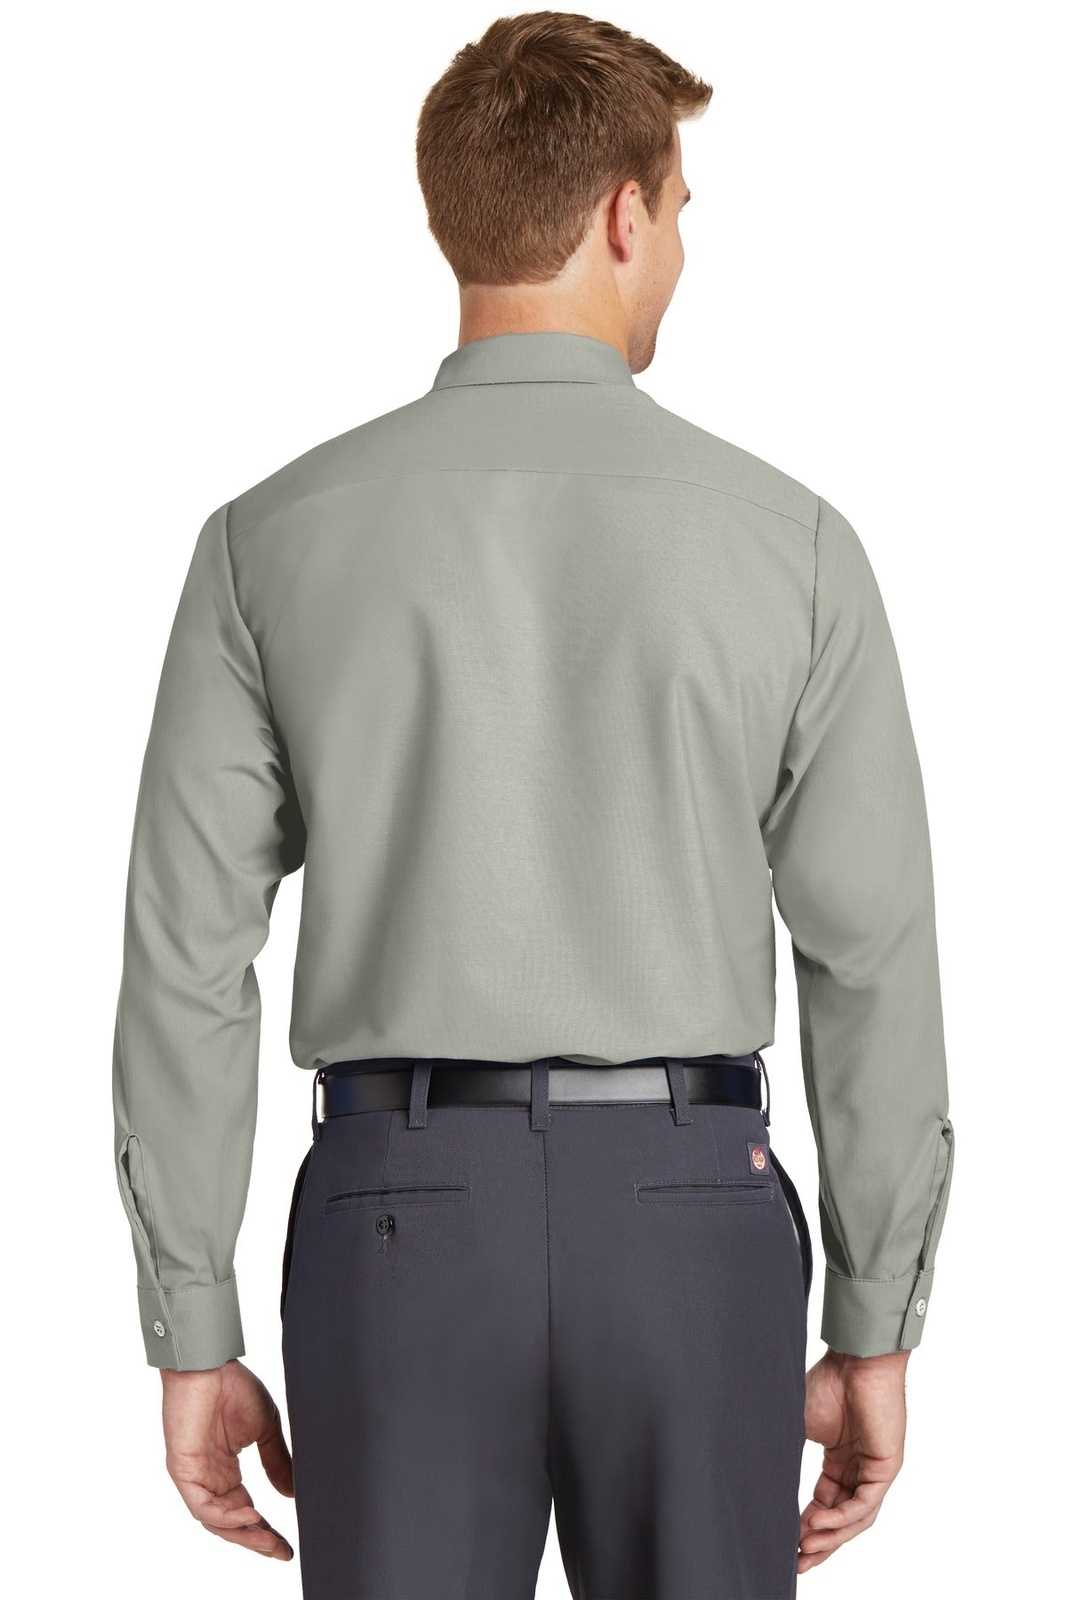 Red Kap SP14 Long Sleeve Industrial Work Shirt - Light Gray - HIT a Double - 2